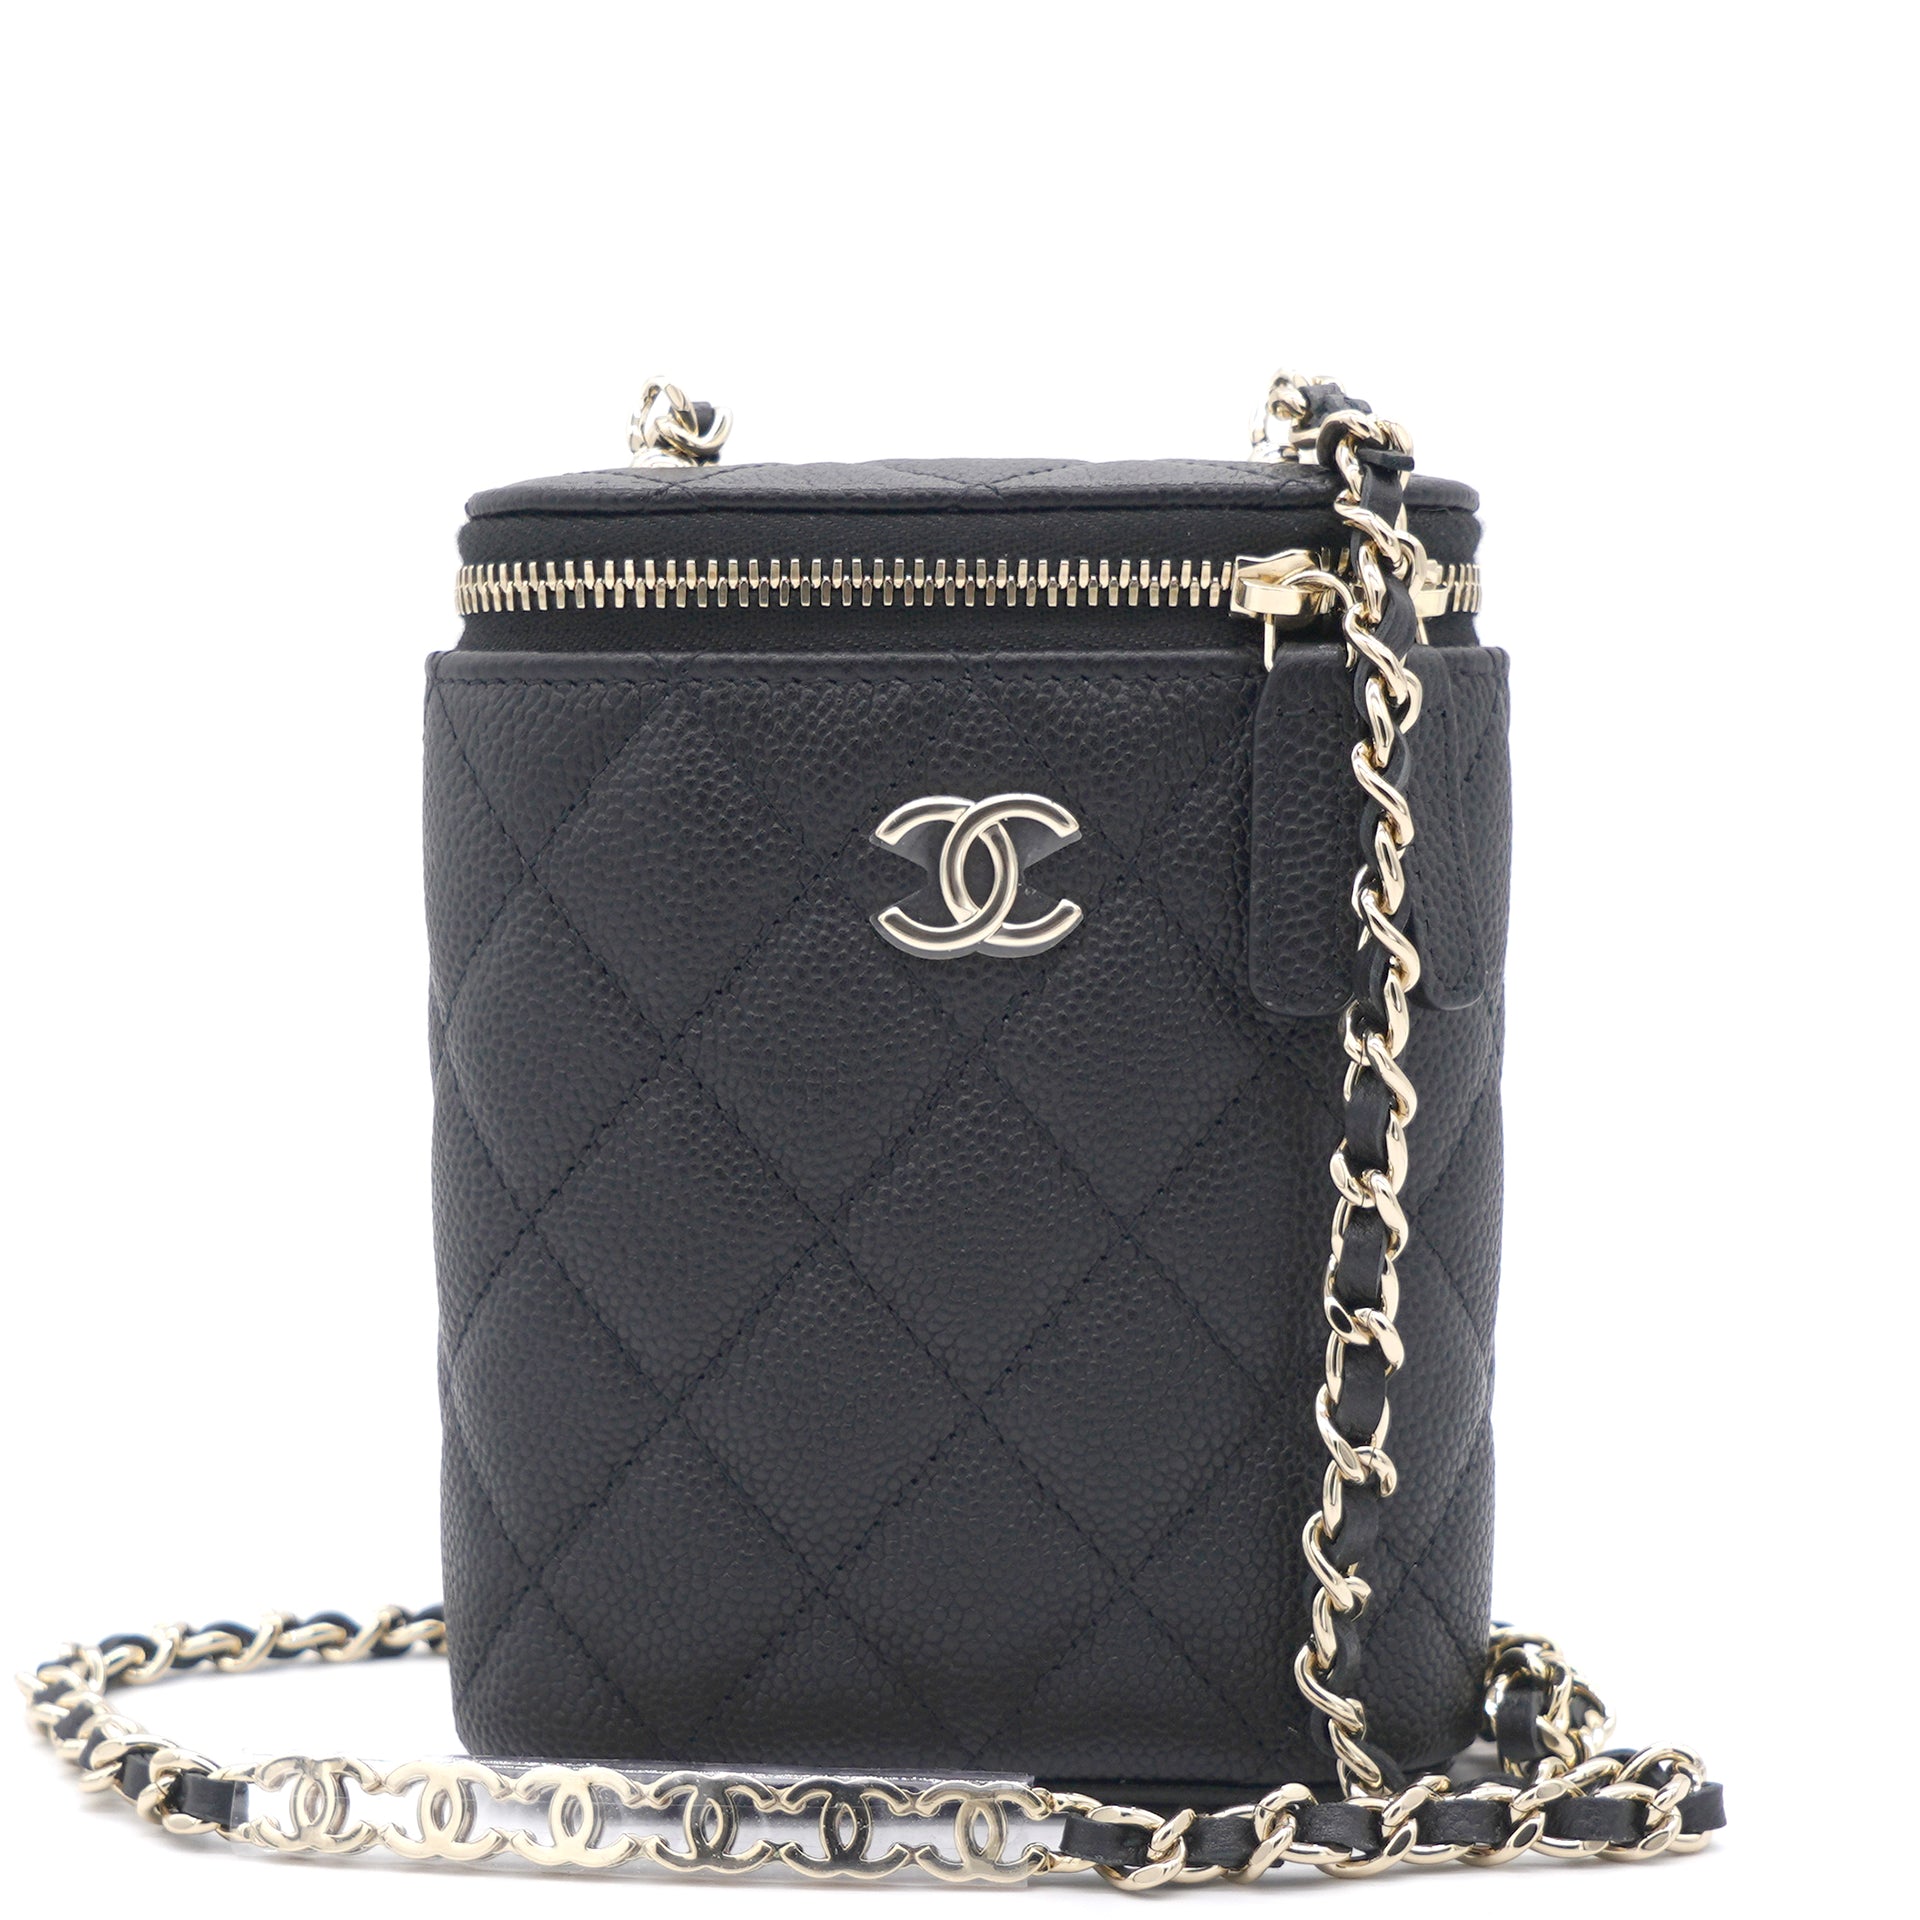 Chanel small vanity case - Gem